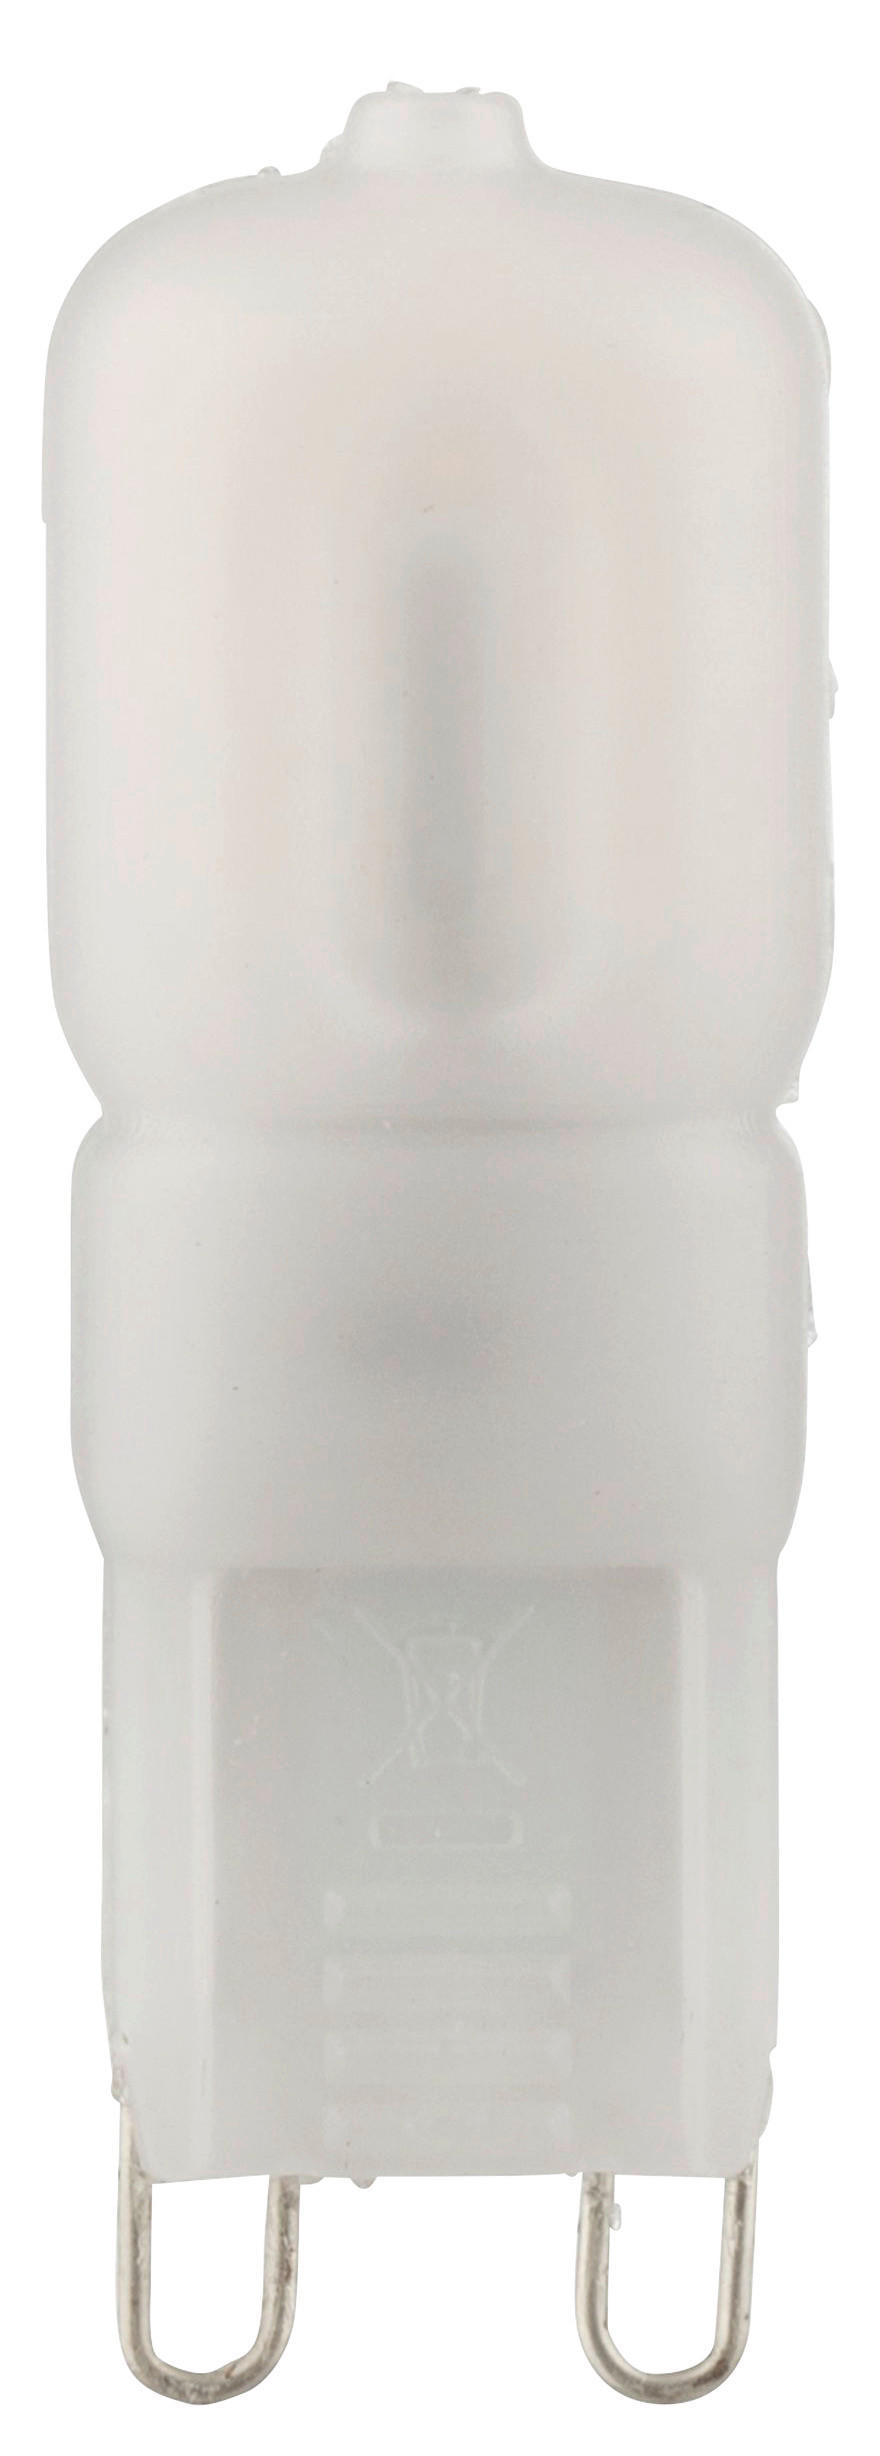 POCOline Stiftsockellampe 33437 G9 LED-Stiftsockellampe G9 - weiß (1,50cm) - POCOline